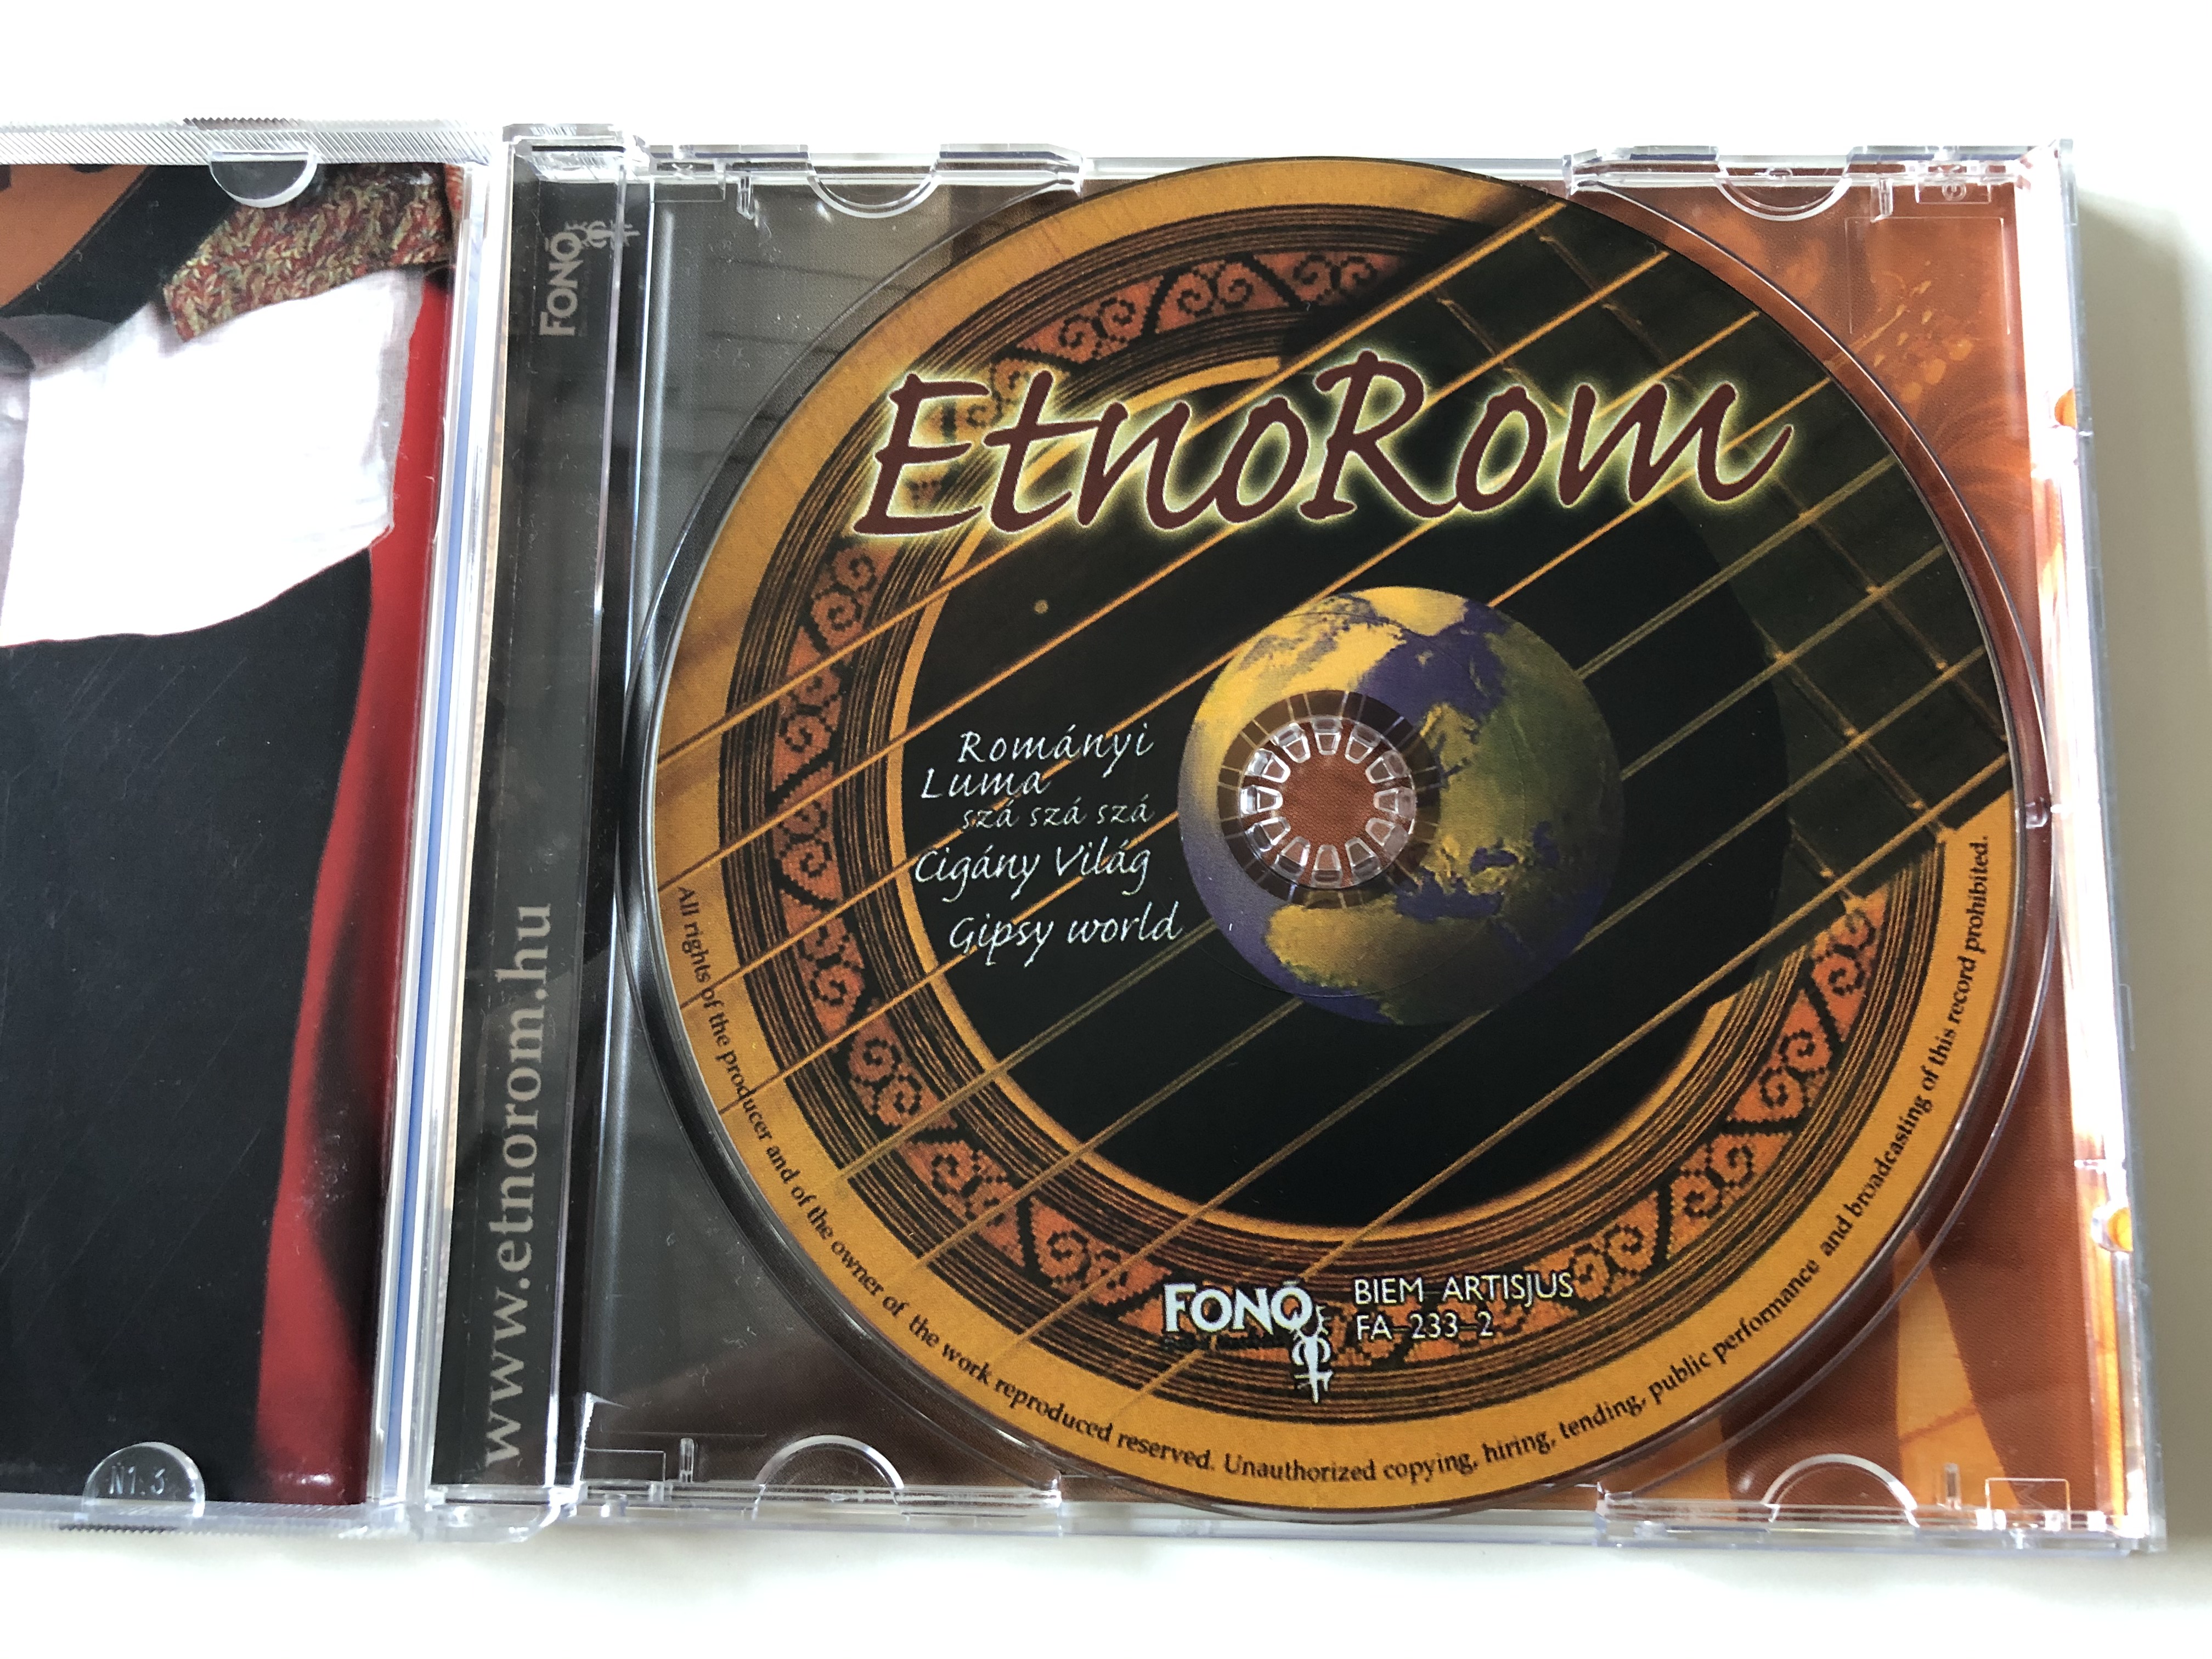 etnorom-rom-nyi-lum-sza-sza-sza-cig-ny-vil-g-gipsy-world-fon-records-audio-cd-2006-5998048523320-7-.jpg